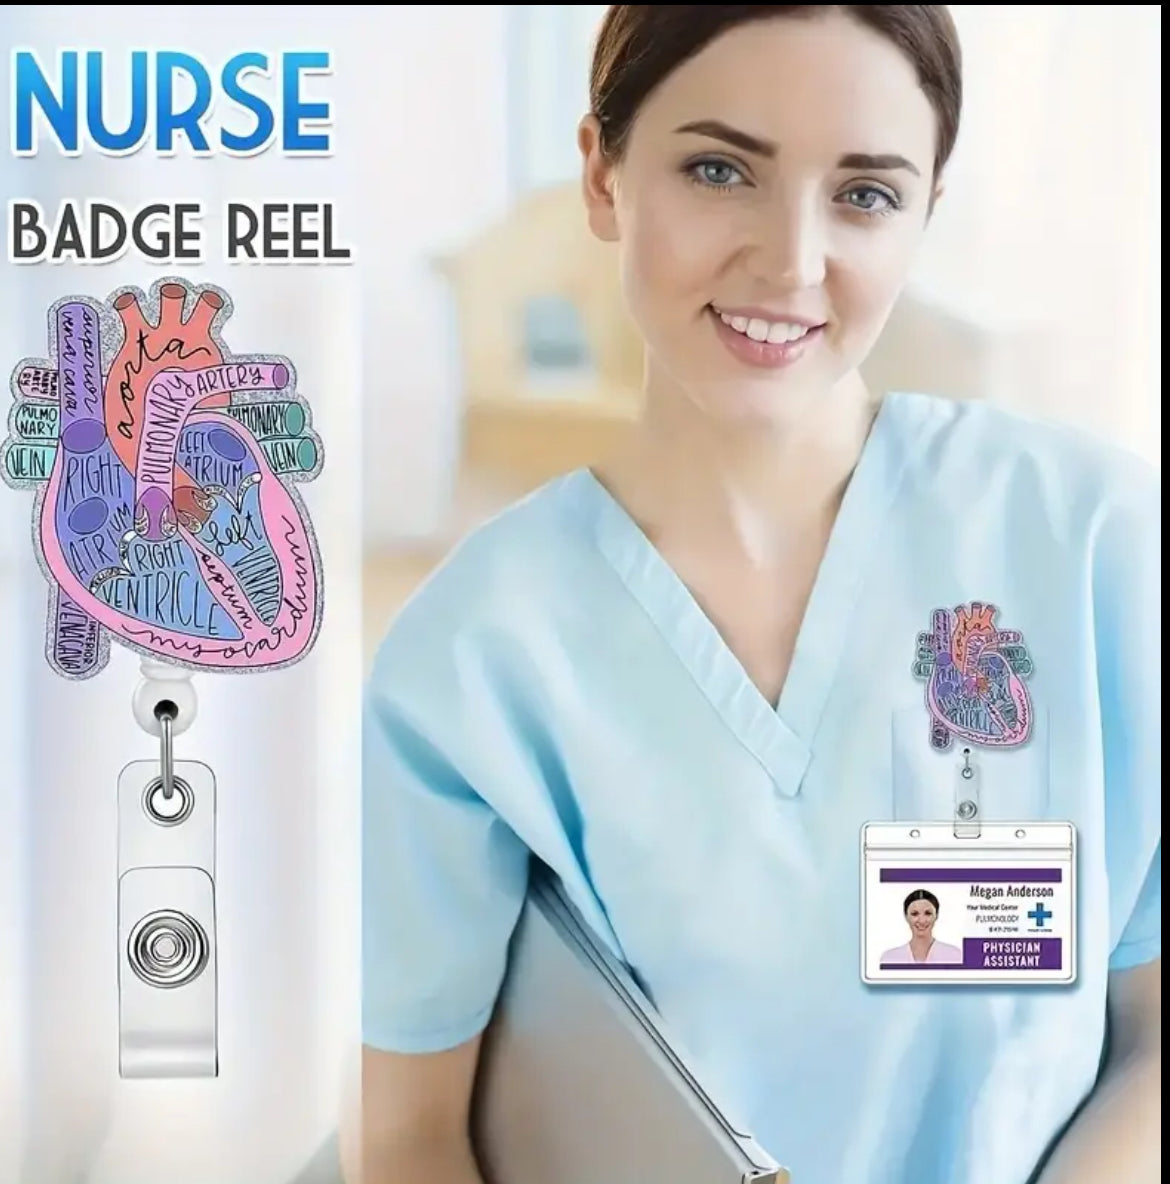 Nurse Badge reel